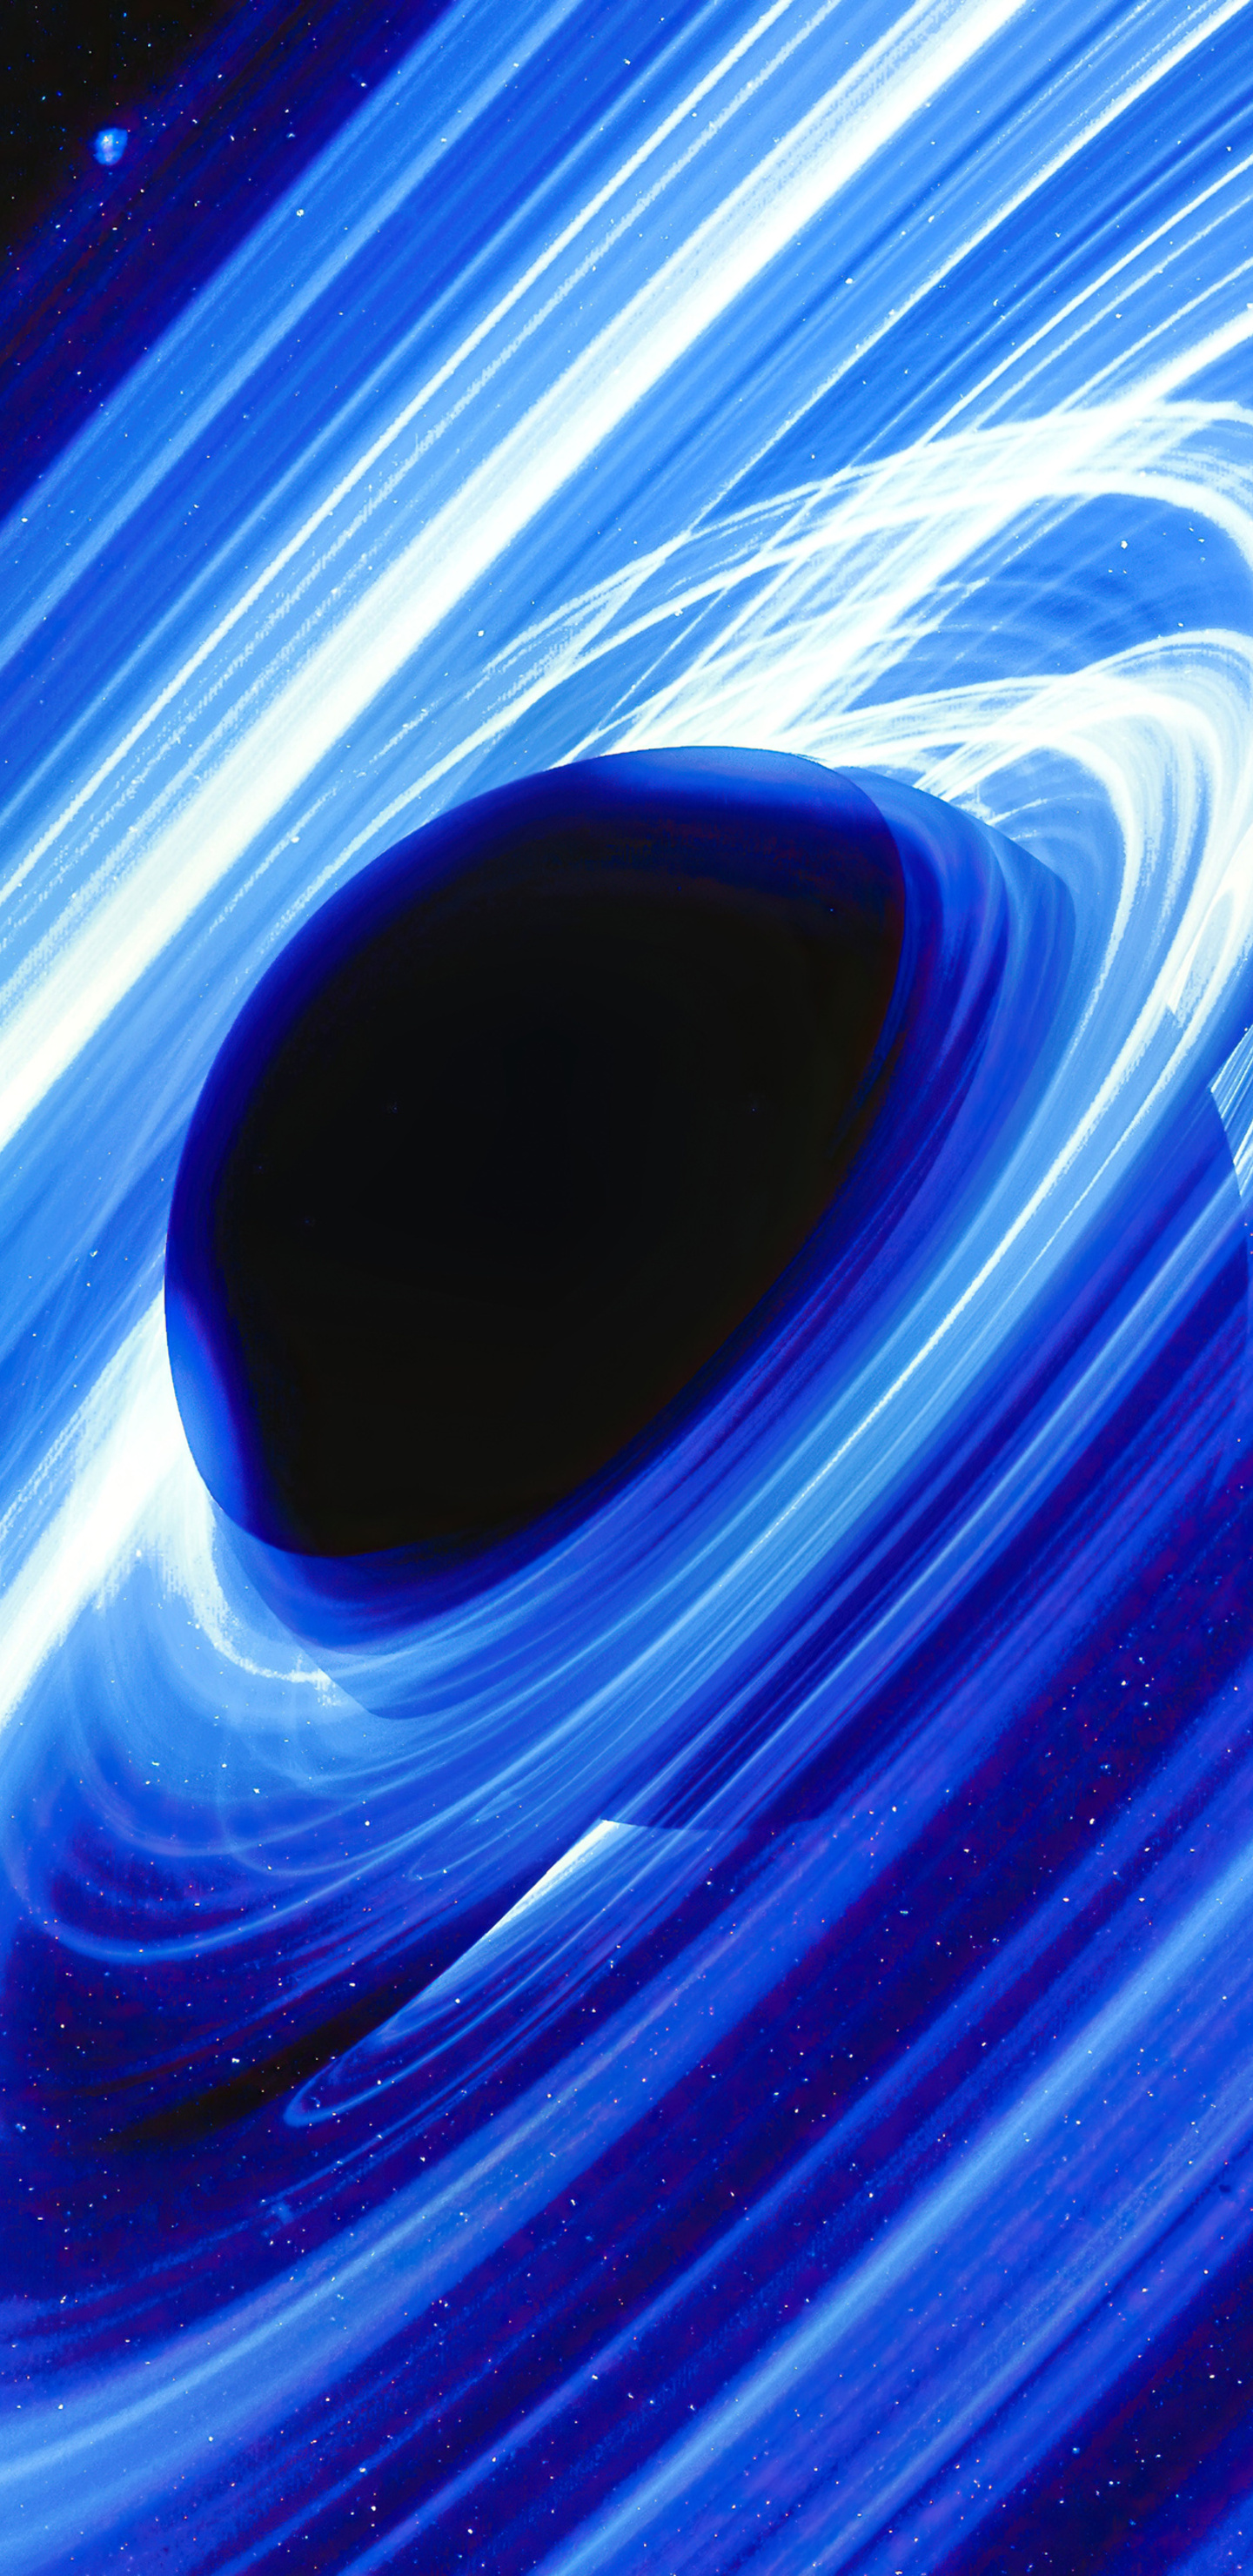 black-hole-space-universe-5k-i7.jpg